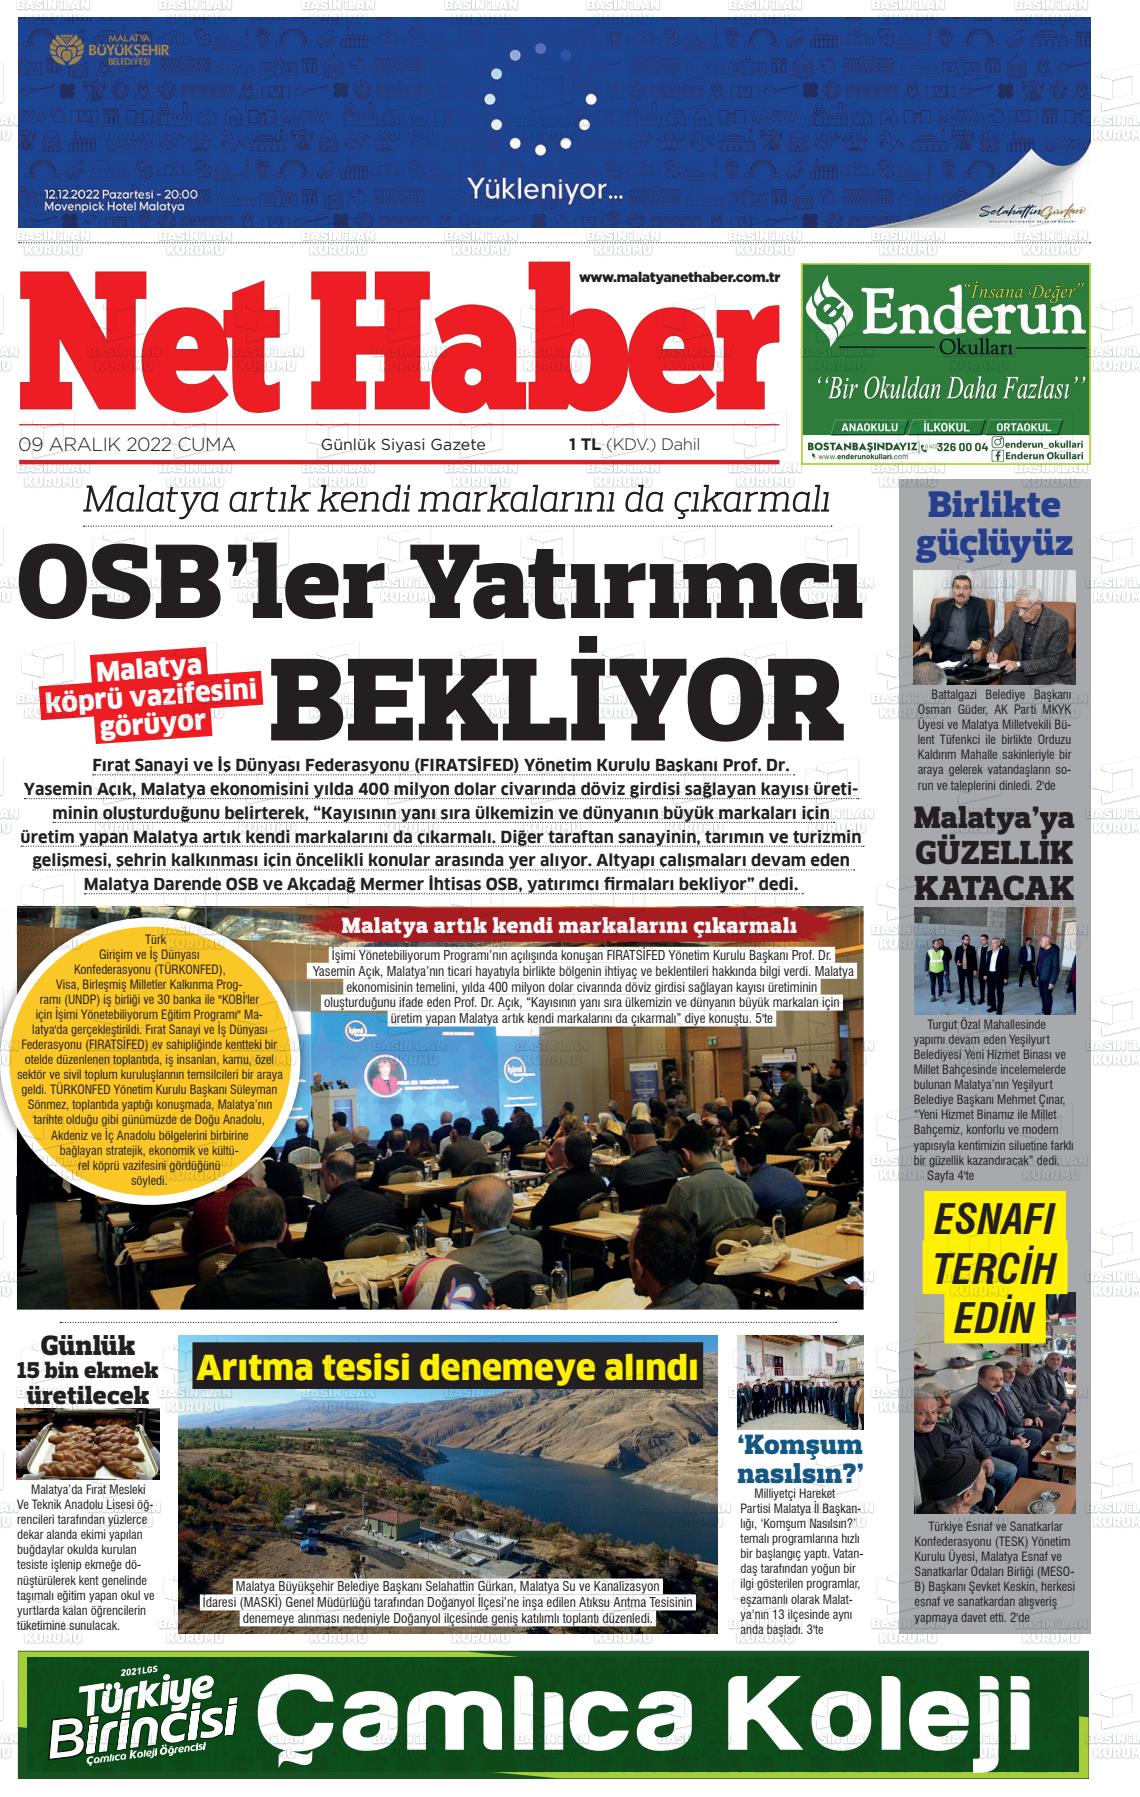 09 Aralık 2022 MALATYA NET HABER Gazete Manşeti